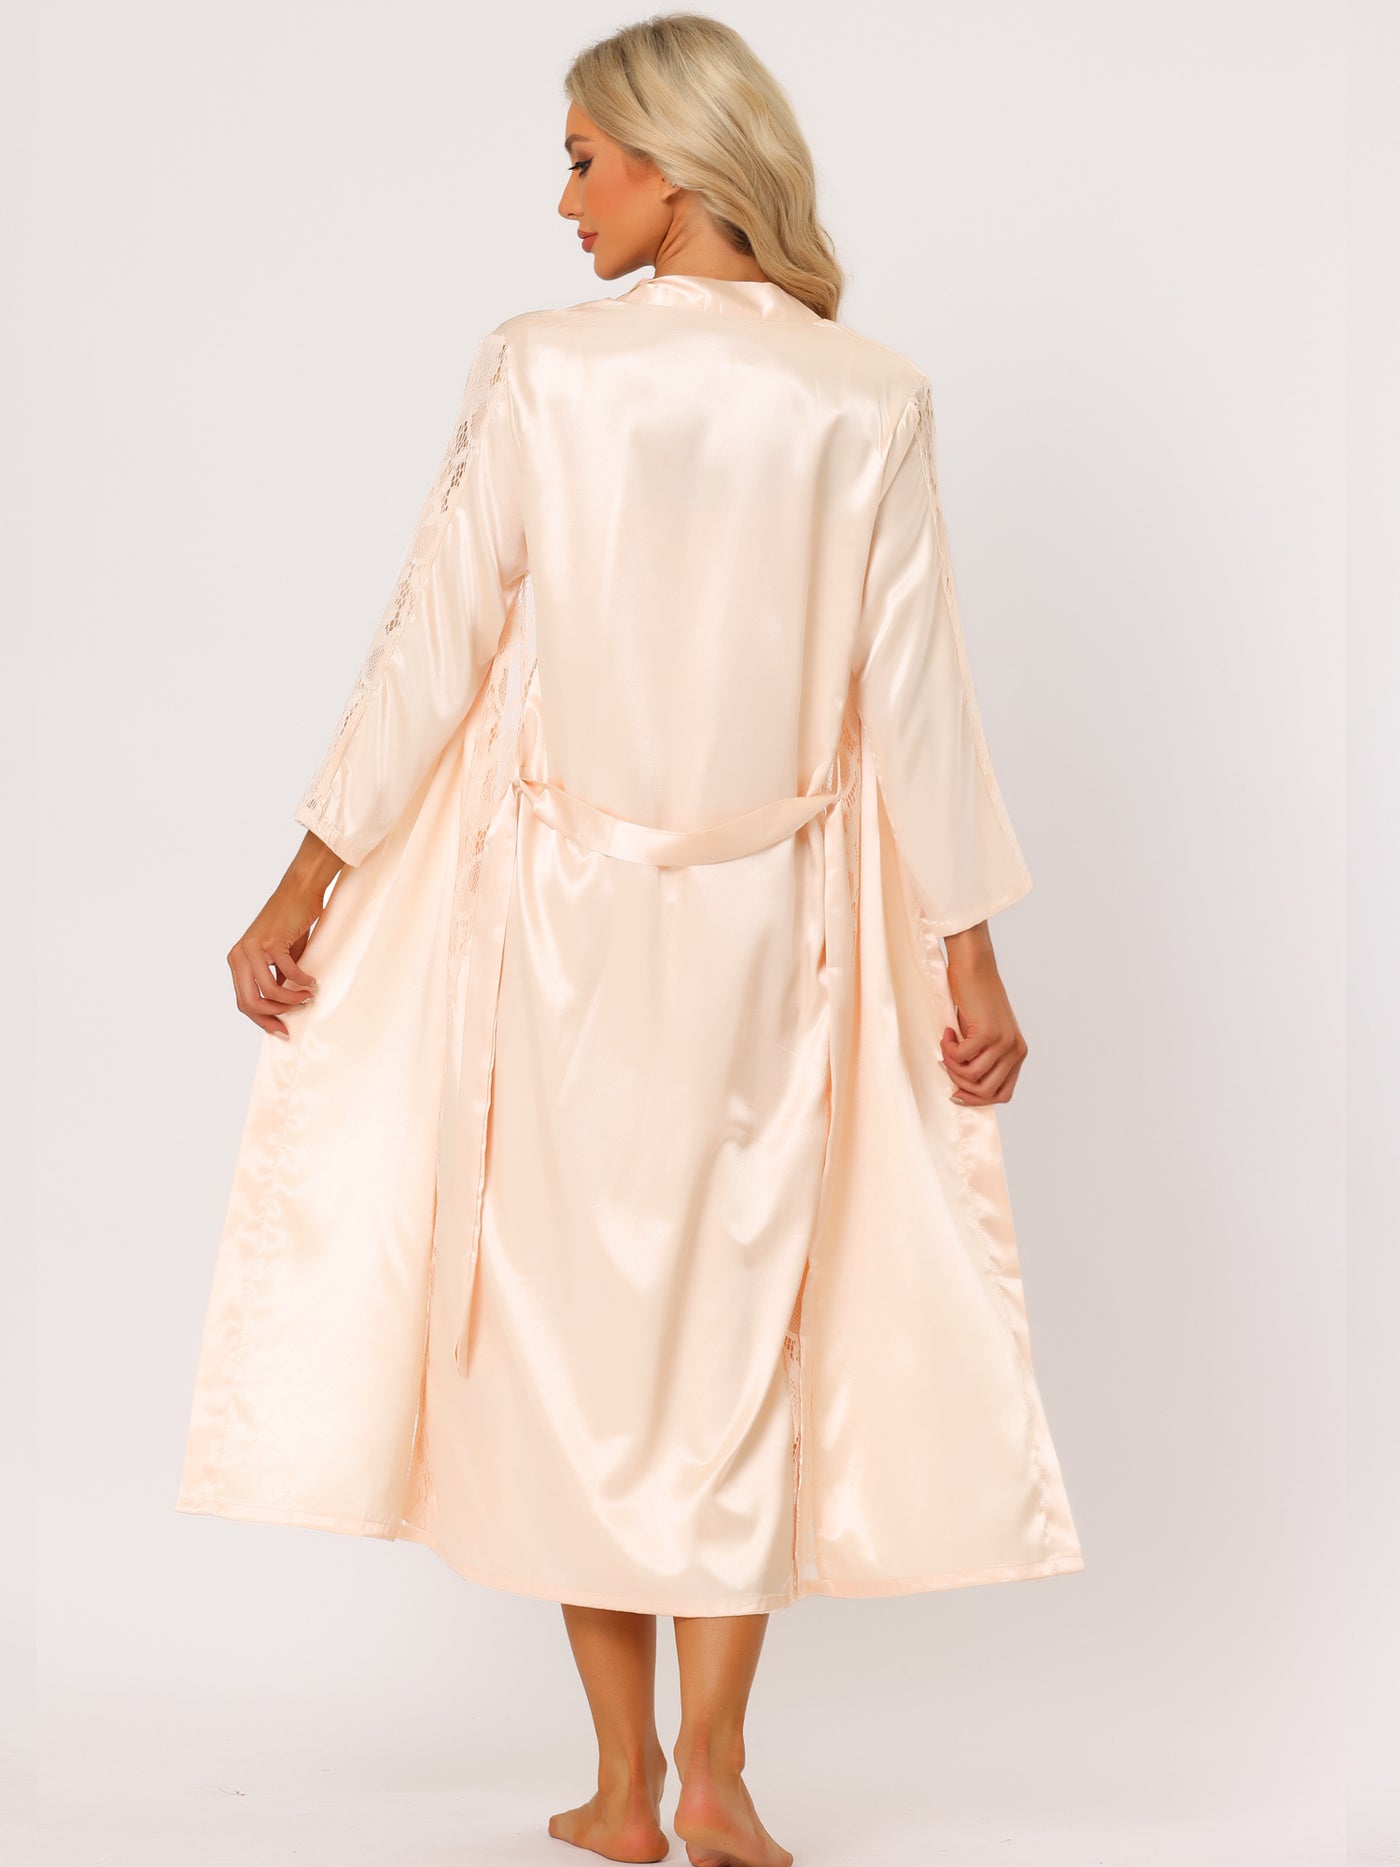 Bublédon Satin Lace Trim Long Sleeve Dressing Gown Bathrobe Bridesmaid Wedding Bride Robe Nightgown Sets